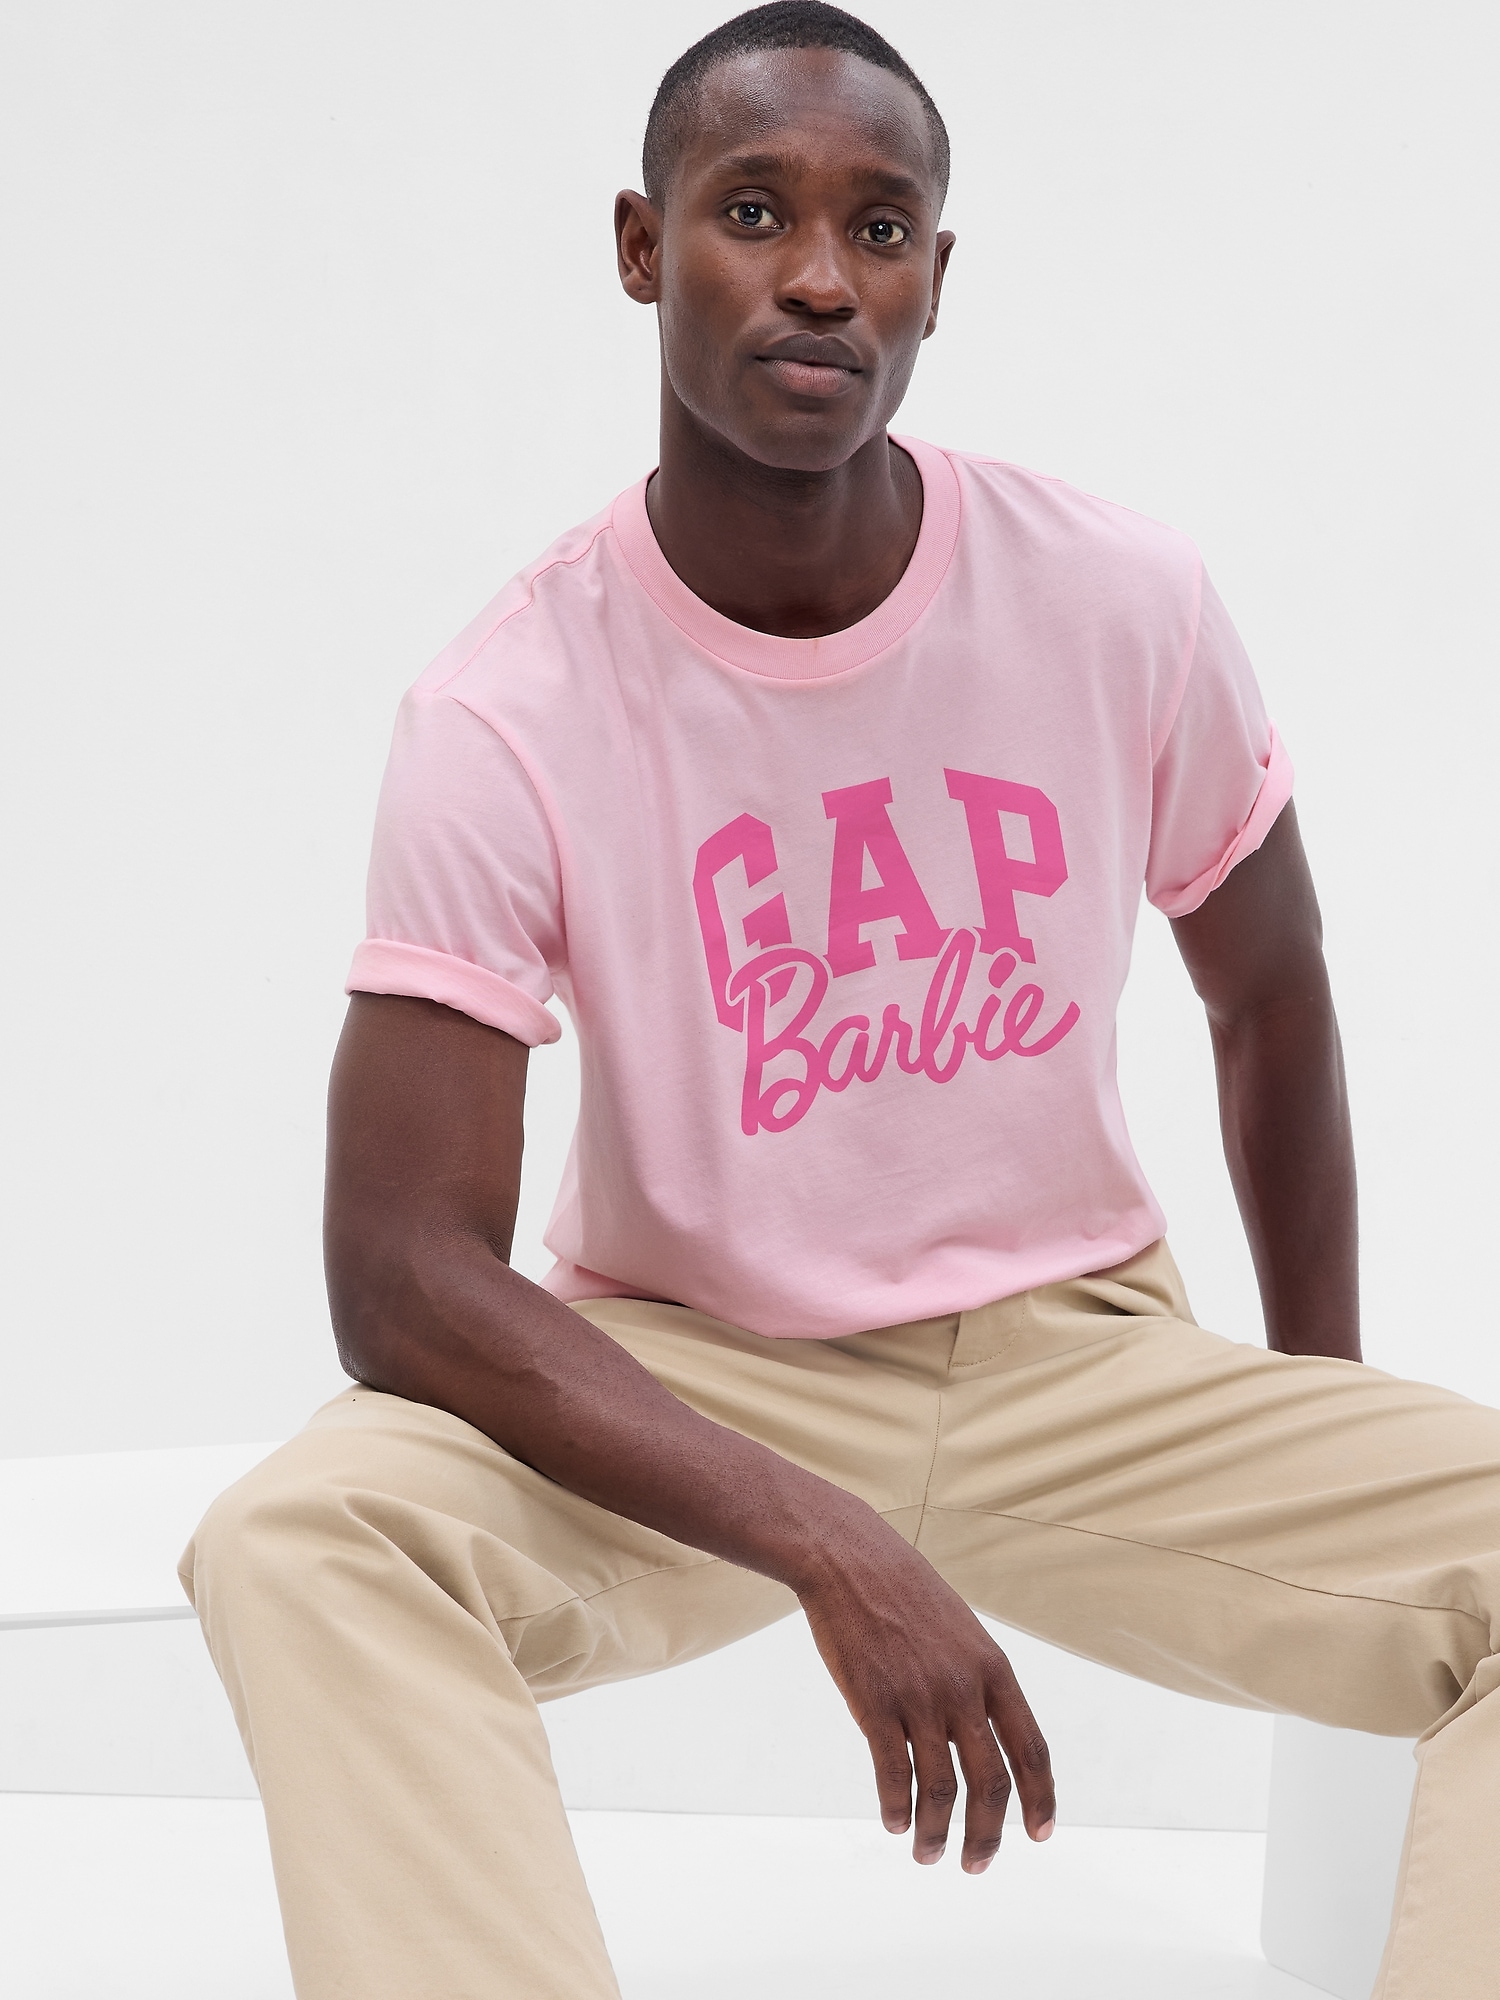  Barbie T-Shirt Mens, Mens' Ken Tee Shirt, Ken Cotton Tshirts  for Men